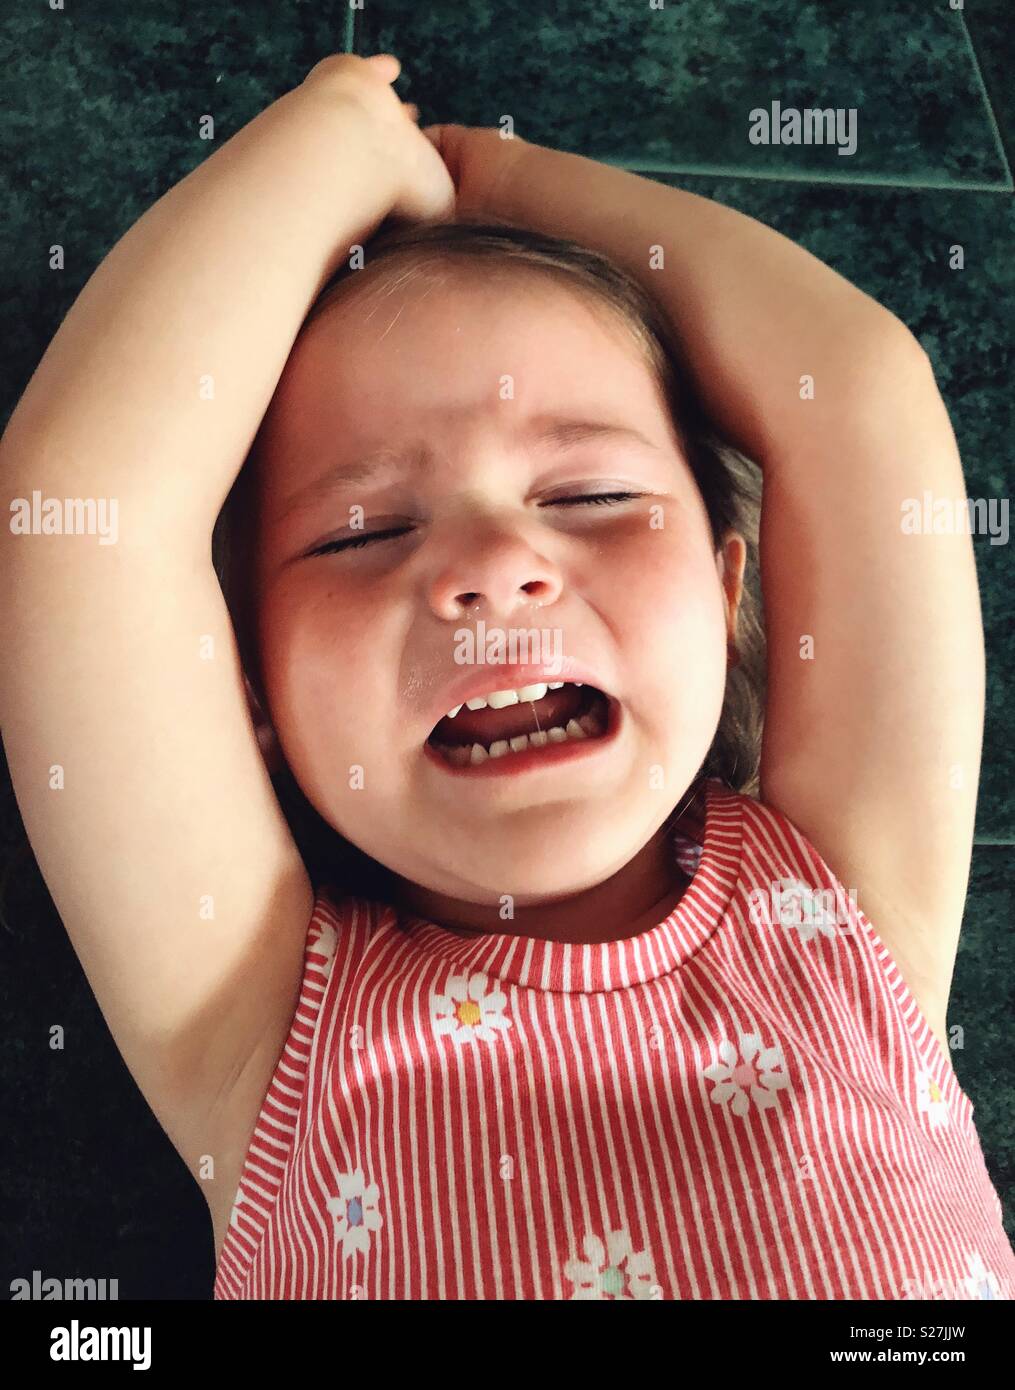 Closeup image of toddler girl face while having a temper tantrum Stock Photo